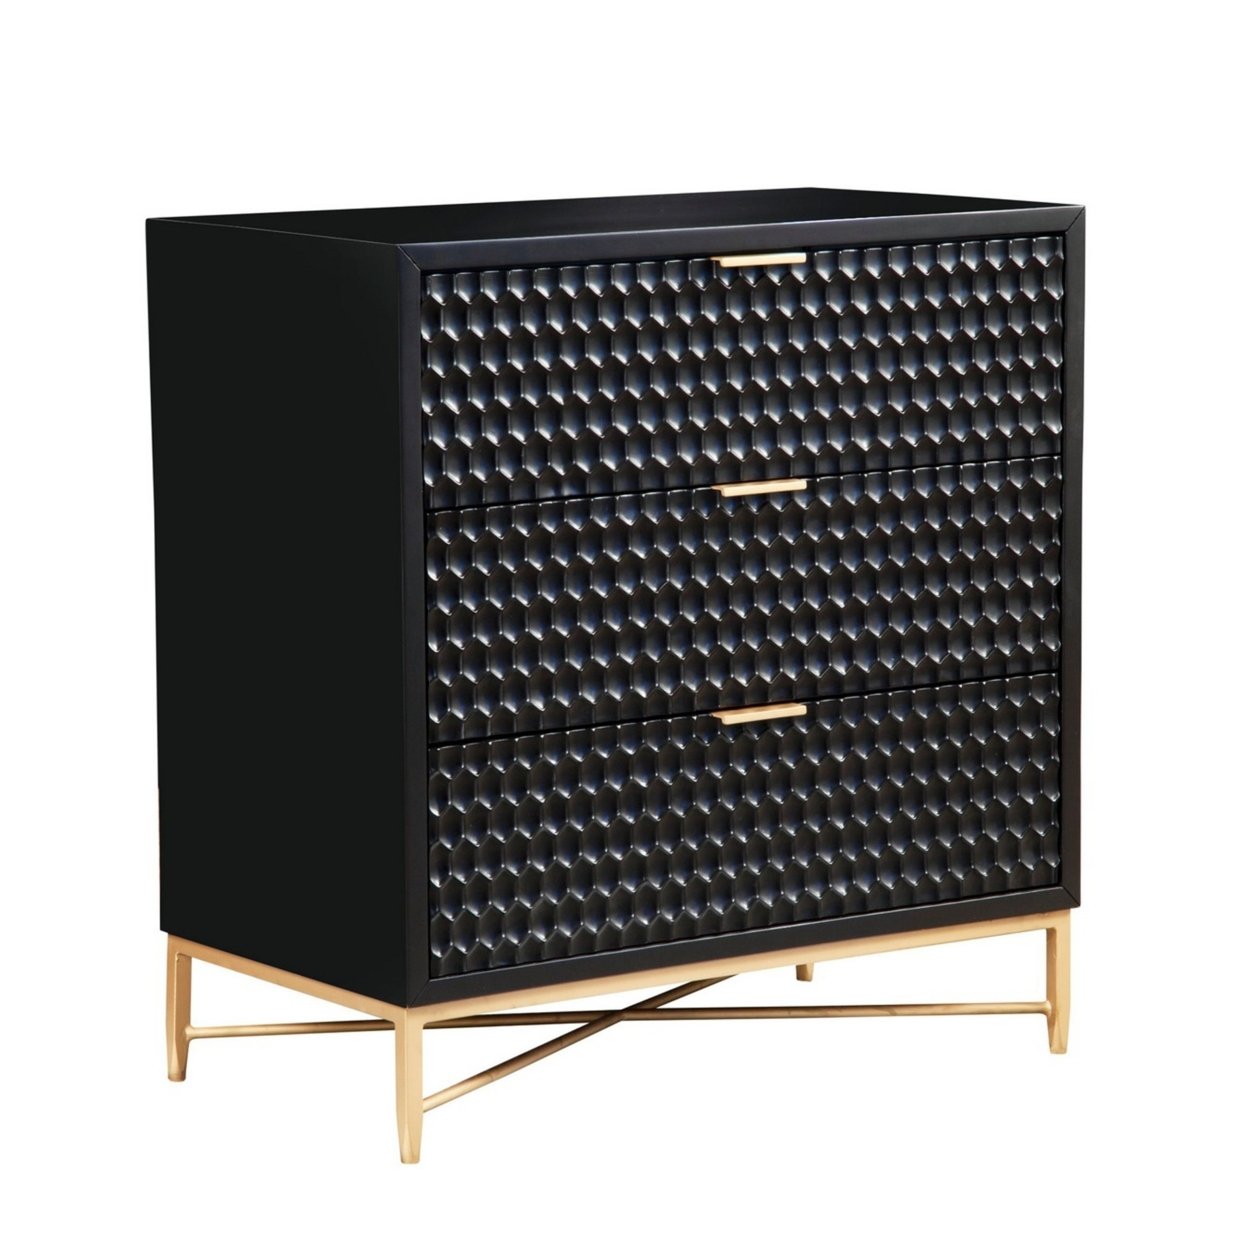 Rexi 34 Inch 3 Drawer Small Dresser Chest, Honeycomb Panels, Black, Gold- Saltoro Sherpi